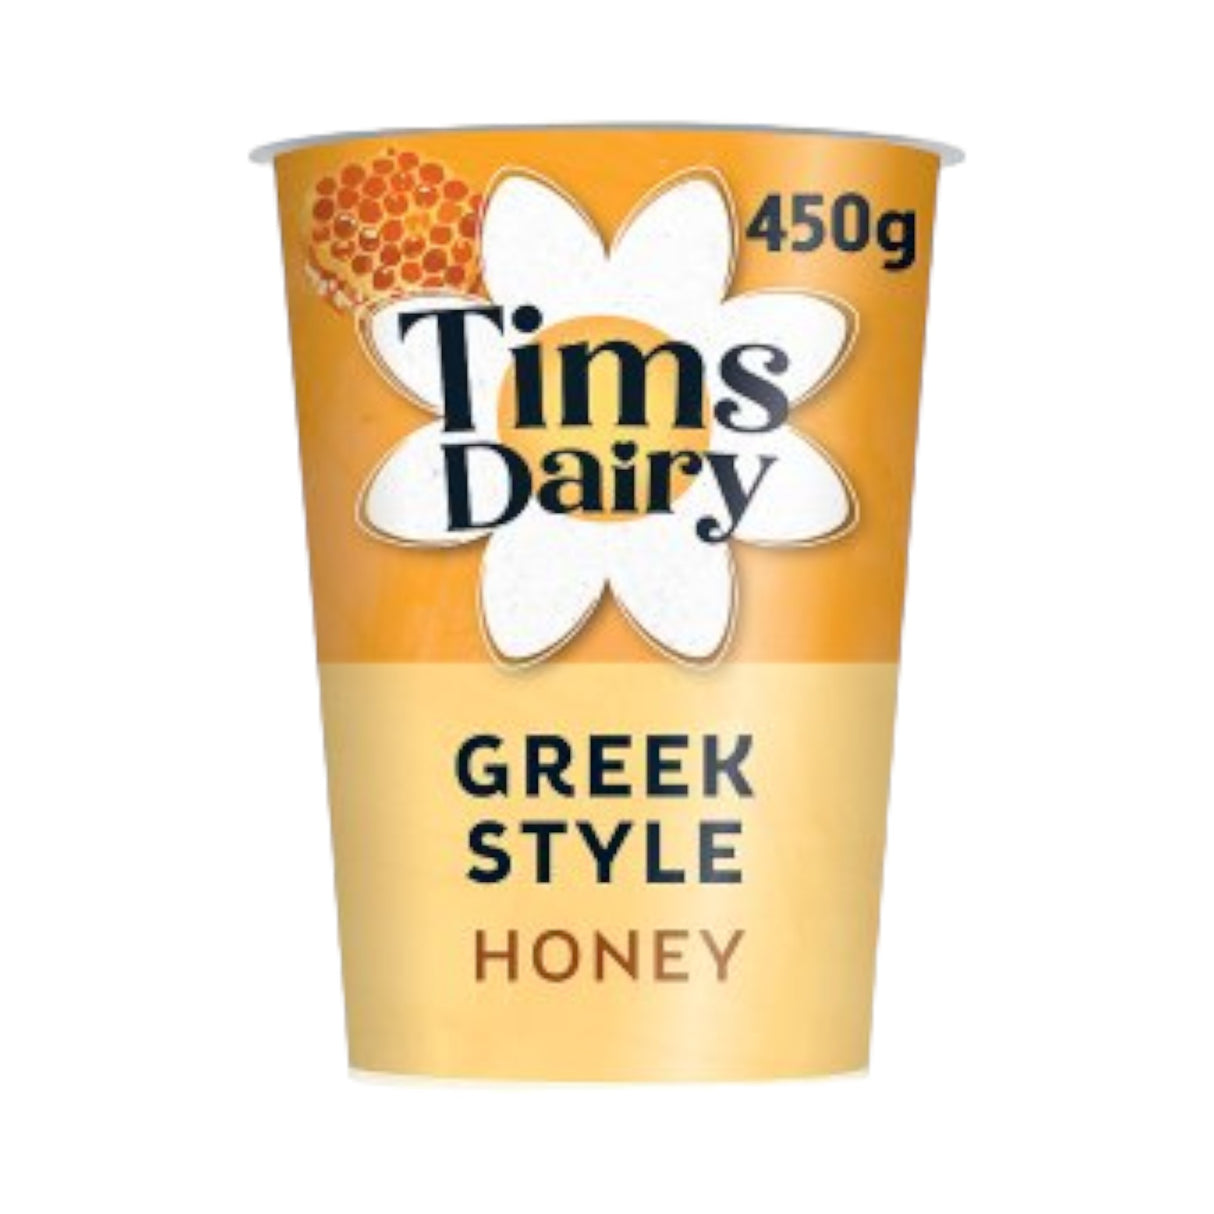 Tims Dairy - Greek Style Honey Yogurt 450g